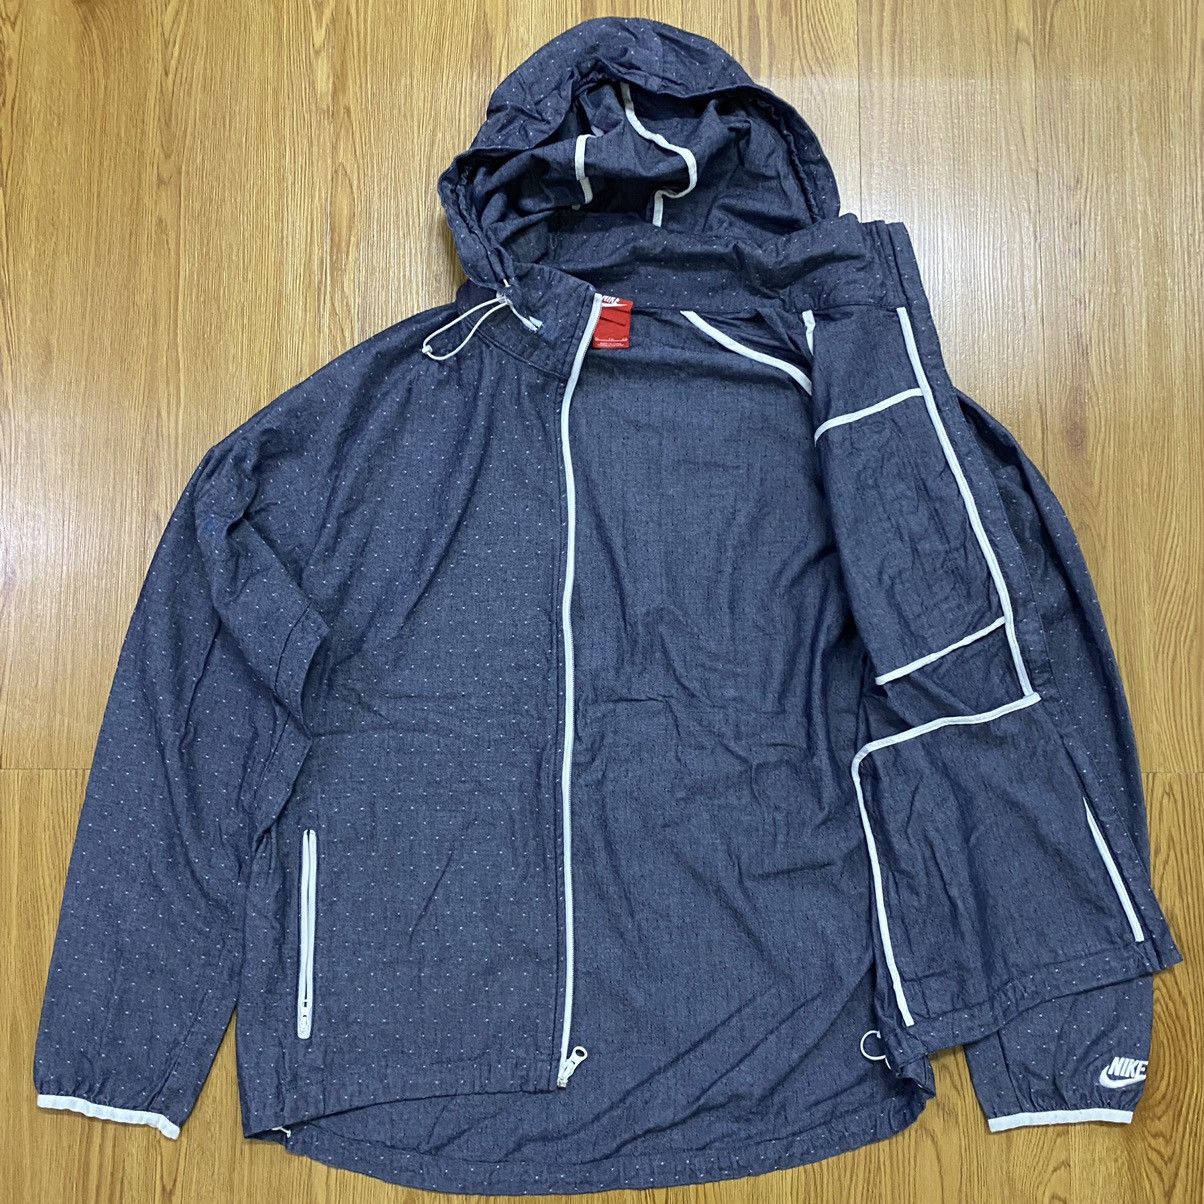 Nike Nike hoodie jacket Size US XL / EU 56 / 4 - 7 Thumbnail